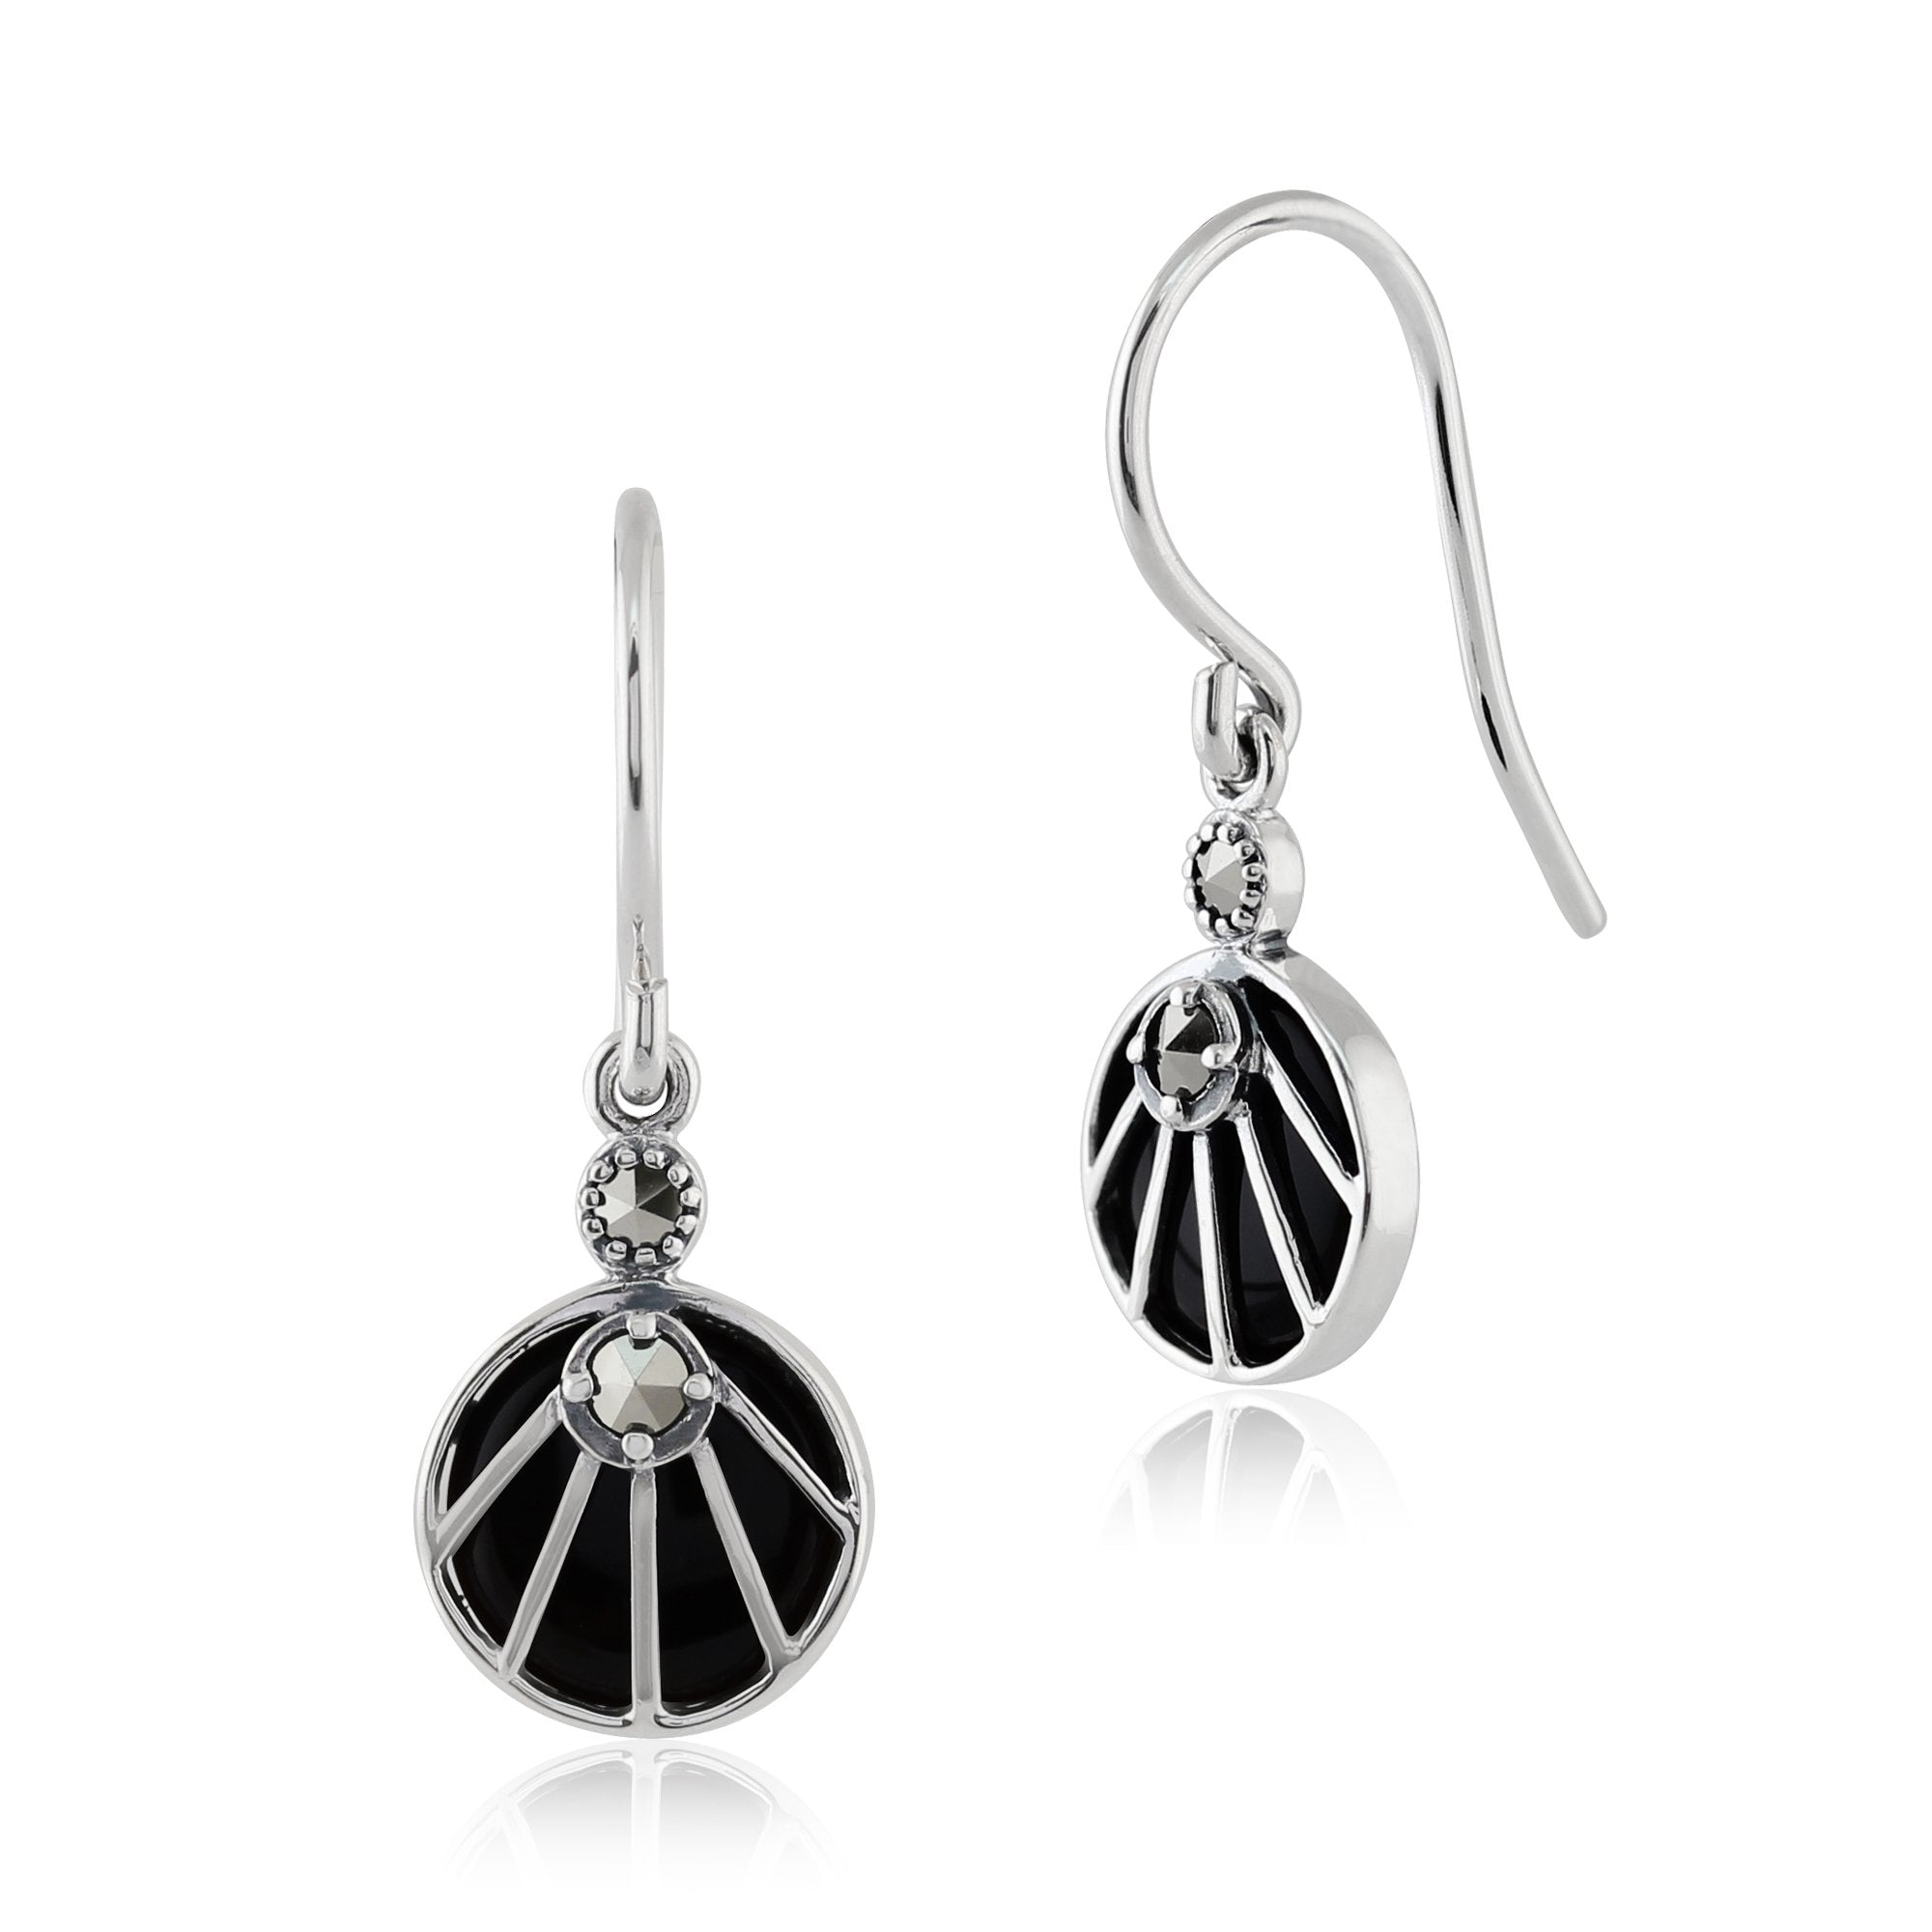 Art Deco Style Black Onyx Cabochon & Marcasite Drop Earrings in 925 Sterling Silver